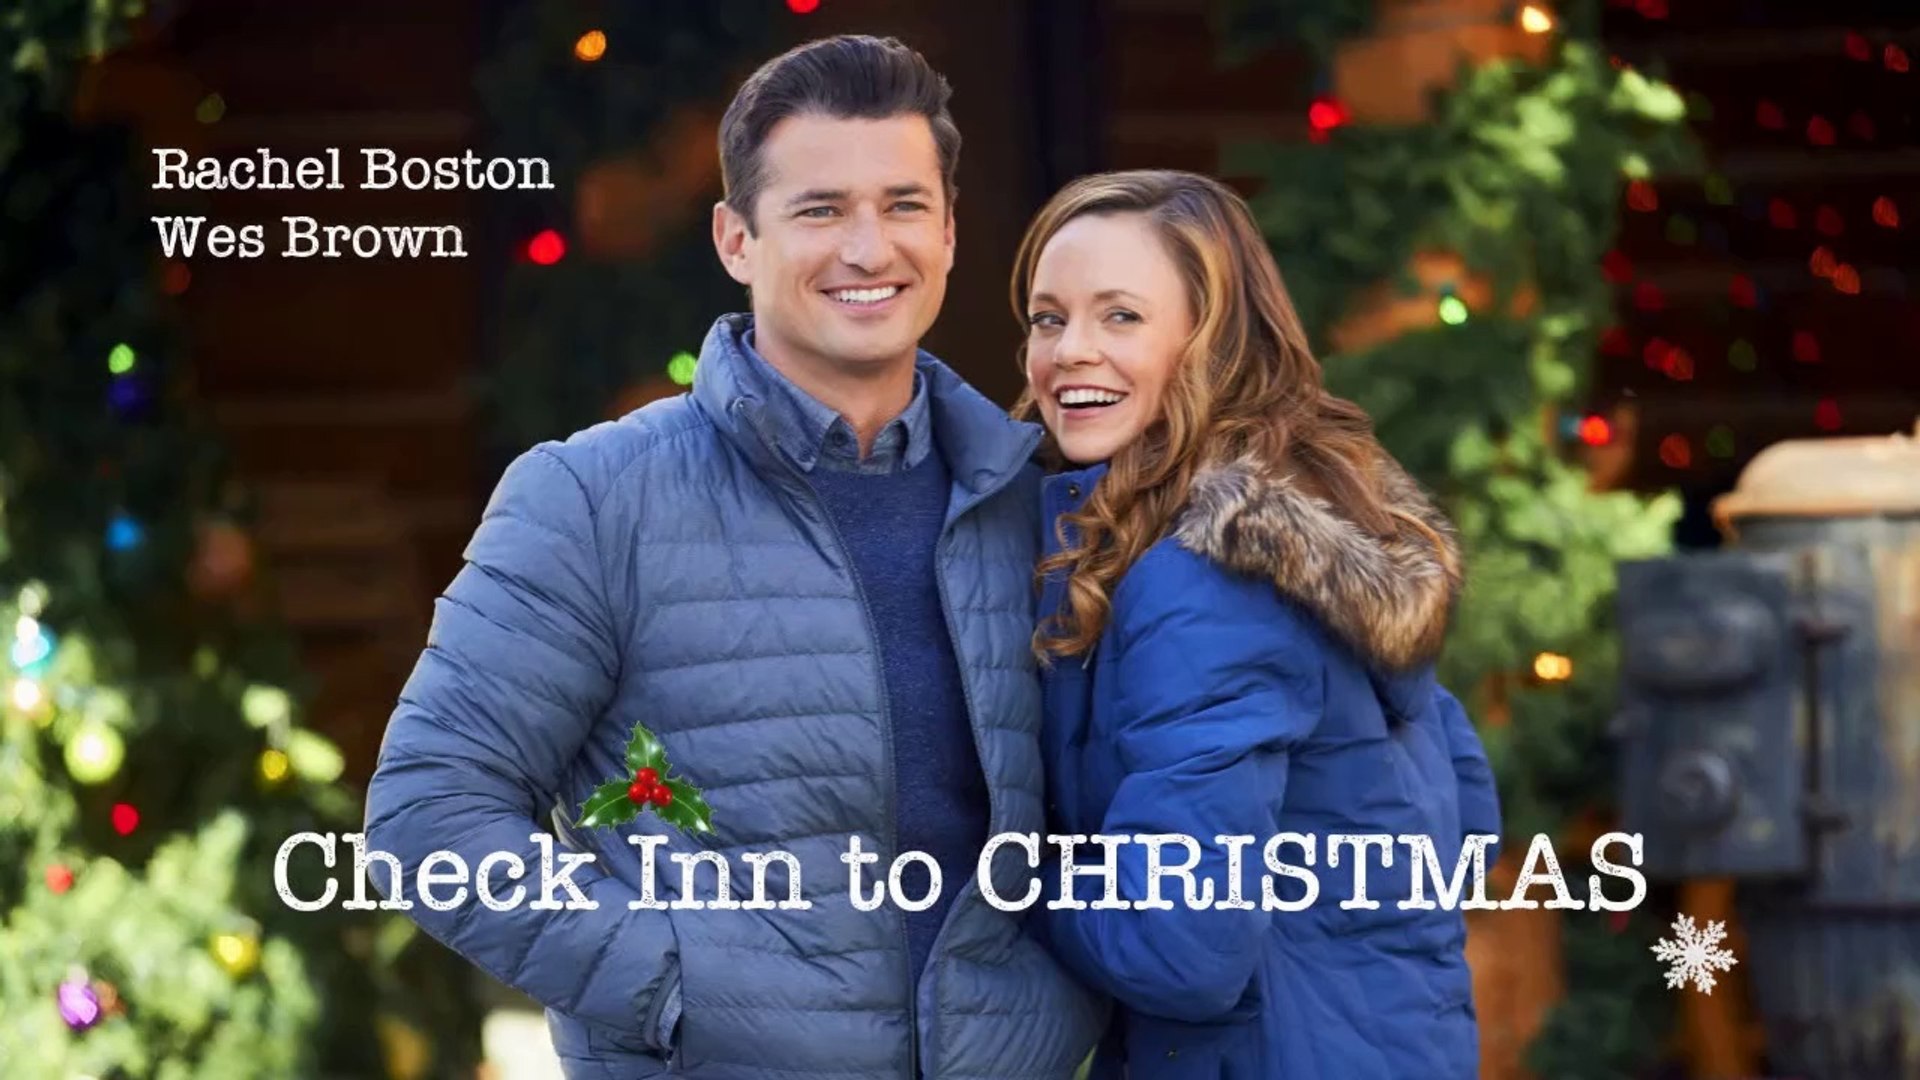 Check Inn to Christmas (2019) HD - video Dailymotion